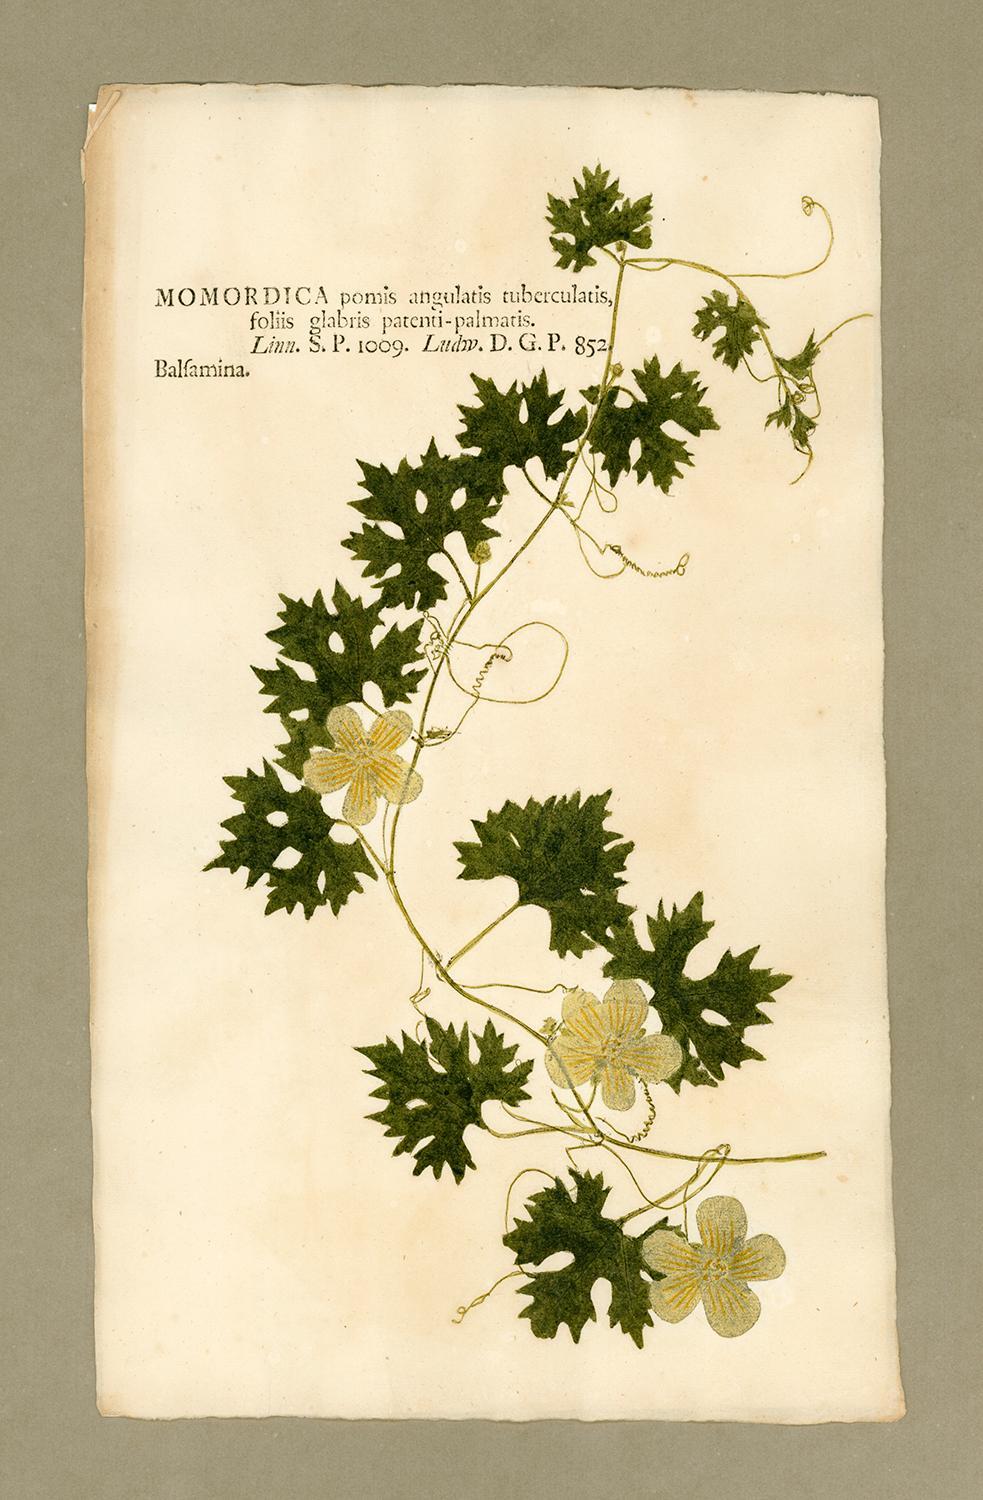 Johann Hieronymus Kniphof  Black and White Photograph - Botanica in Originali, seu Herbarium Vivum - "Nature Printed Plants" -25